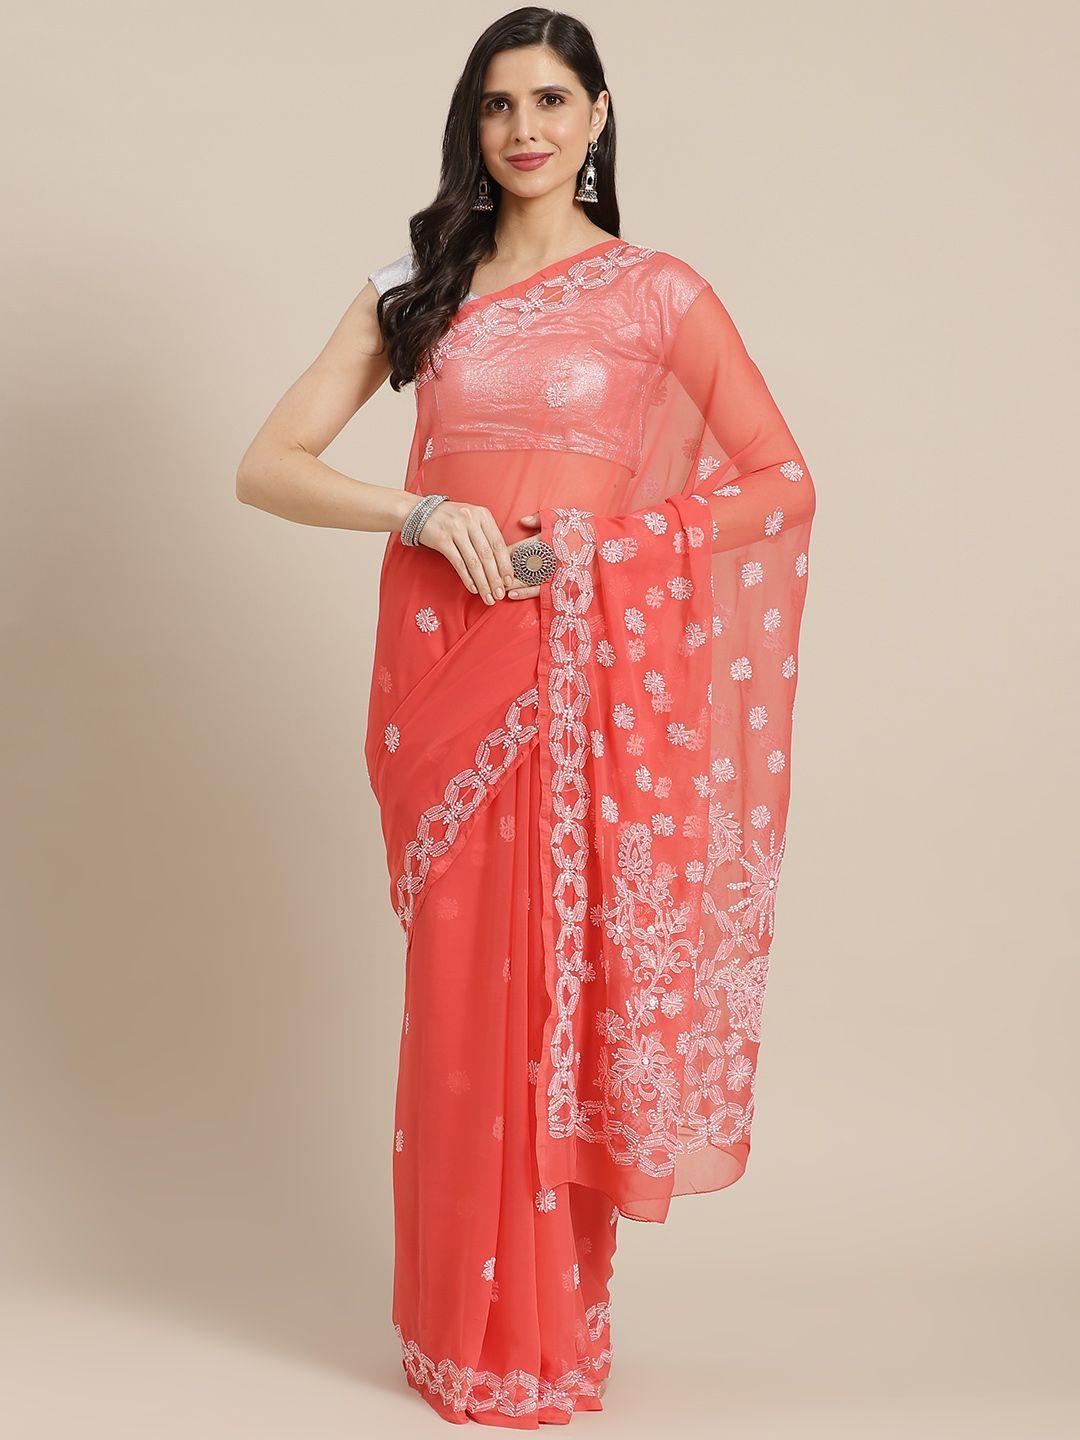 ada coral pink & white ethnic motifs chikankari embroidered handloom saree